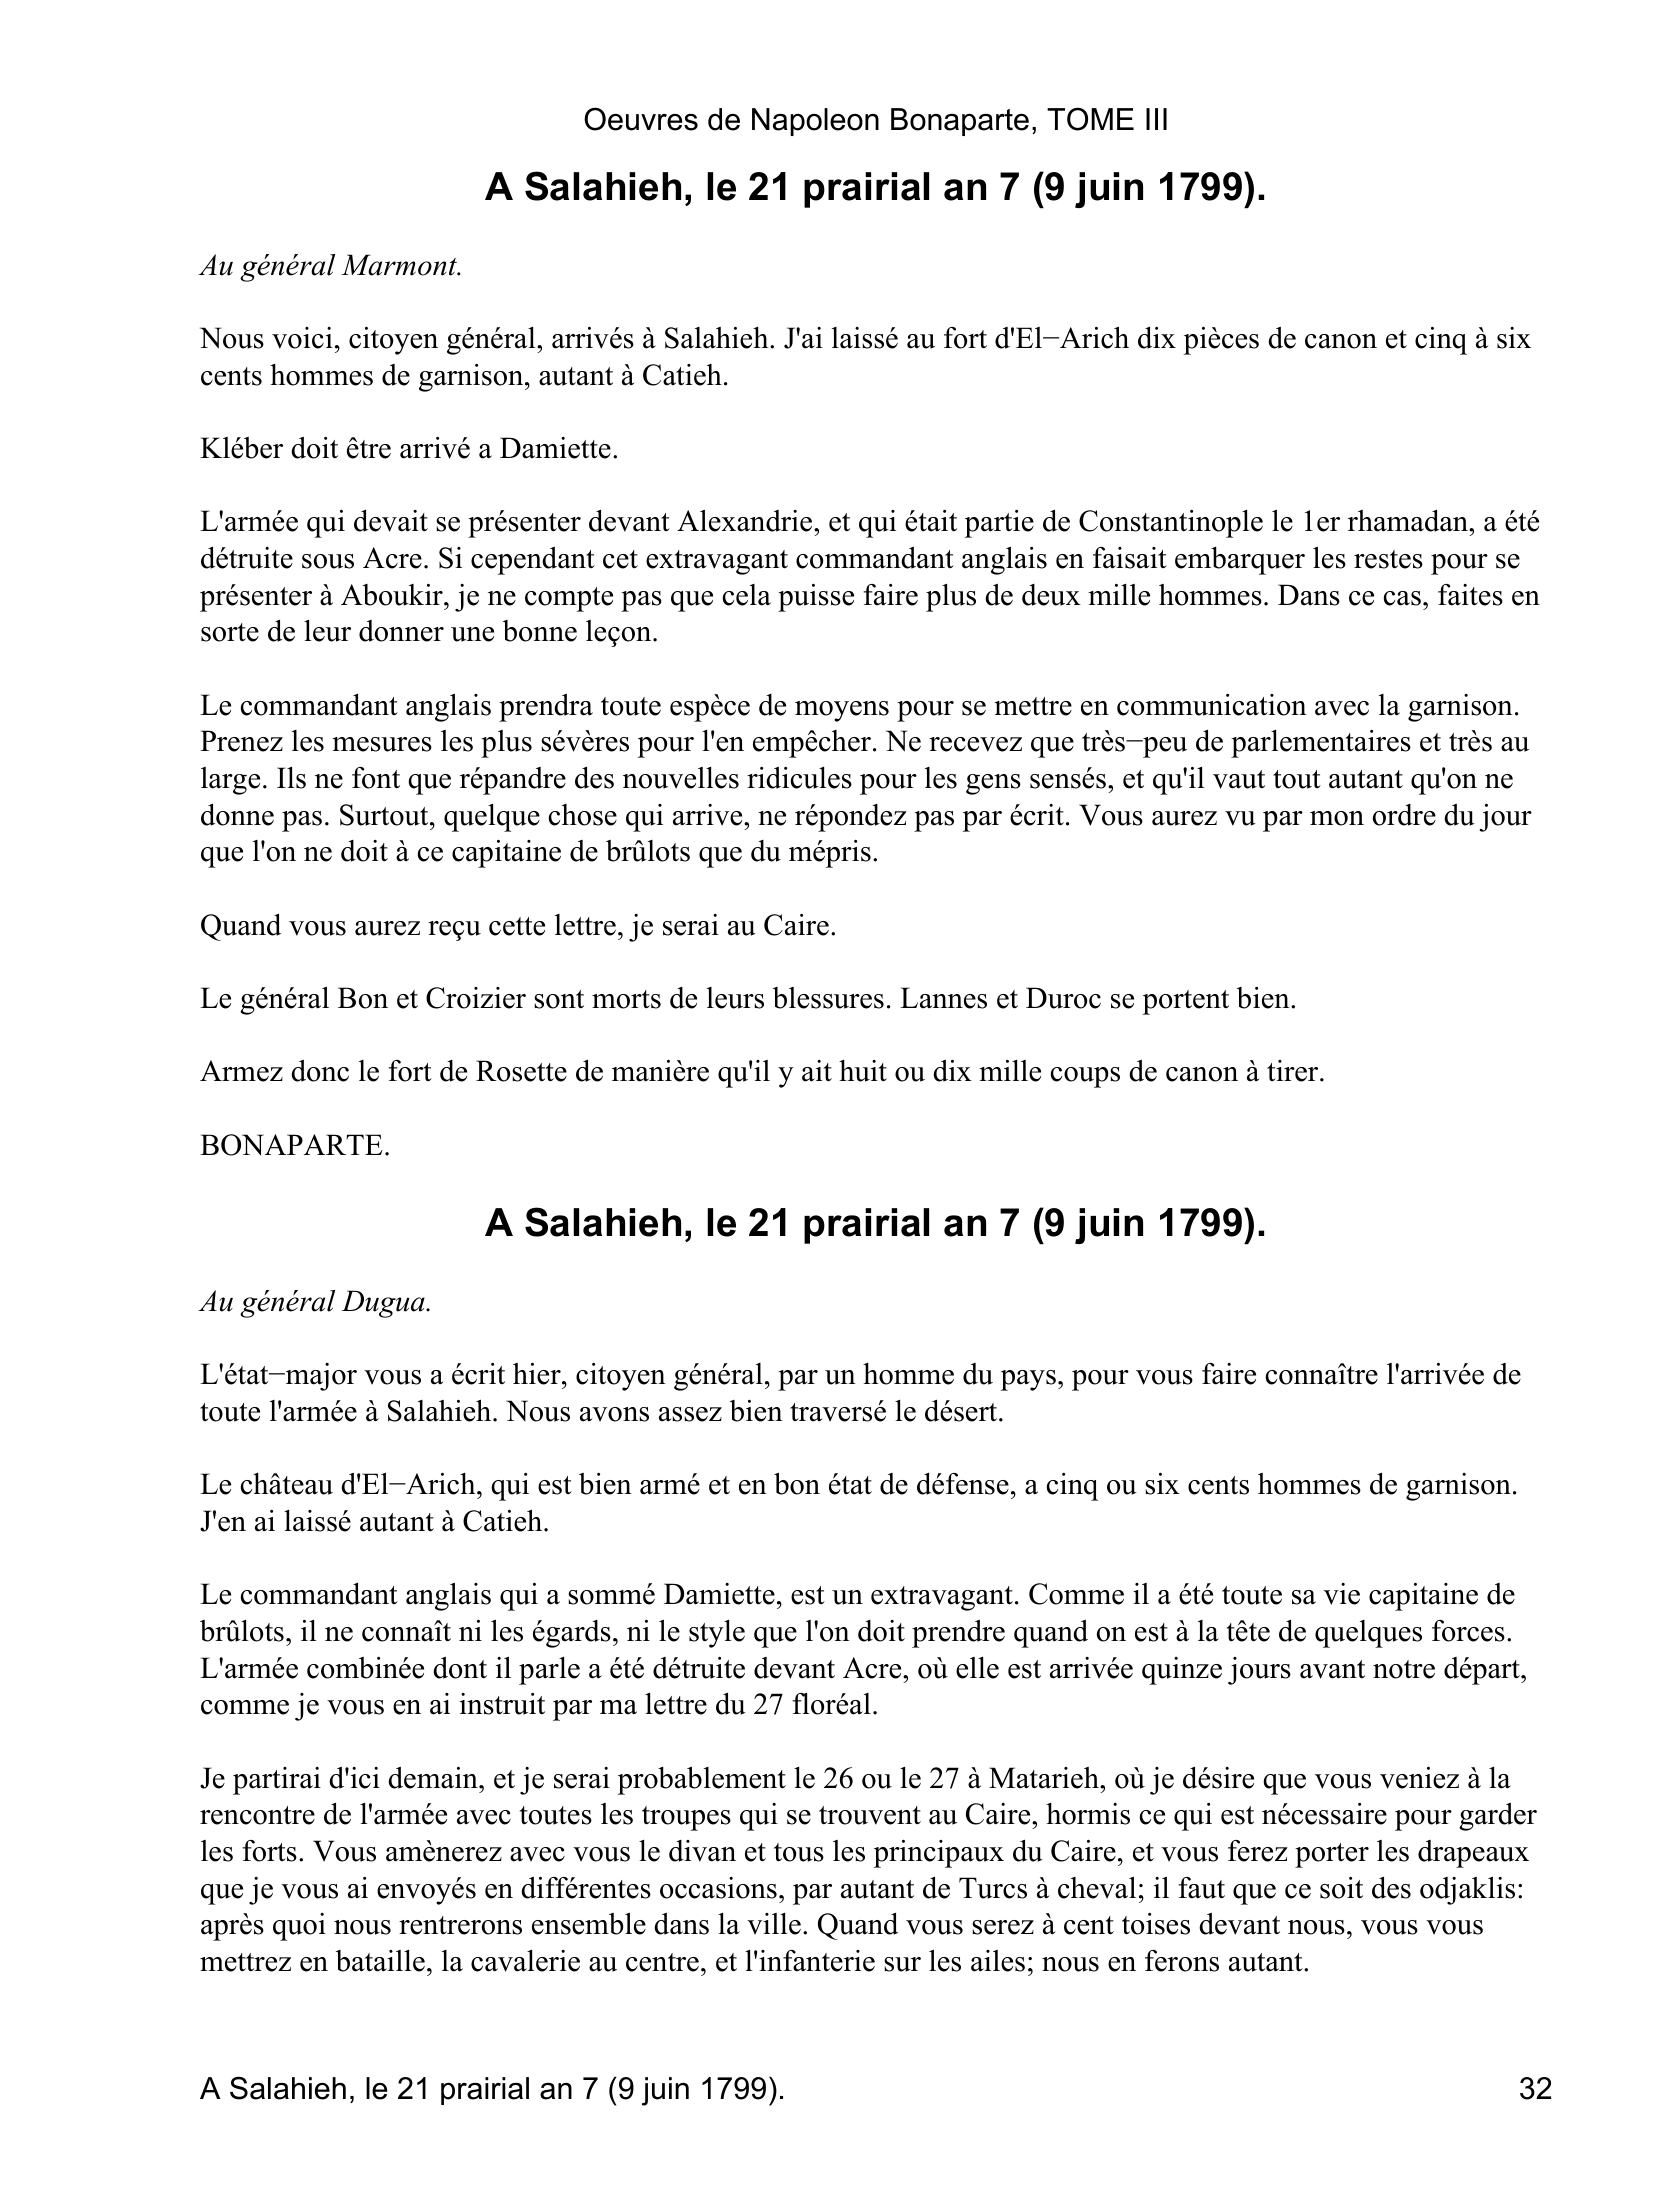 Prévisualisation du document Oeuvres de Napoleon Bonaparte, TOME III
BONAPARTE.